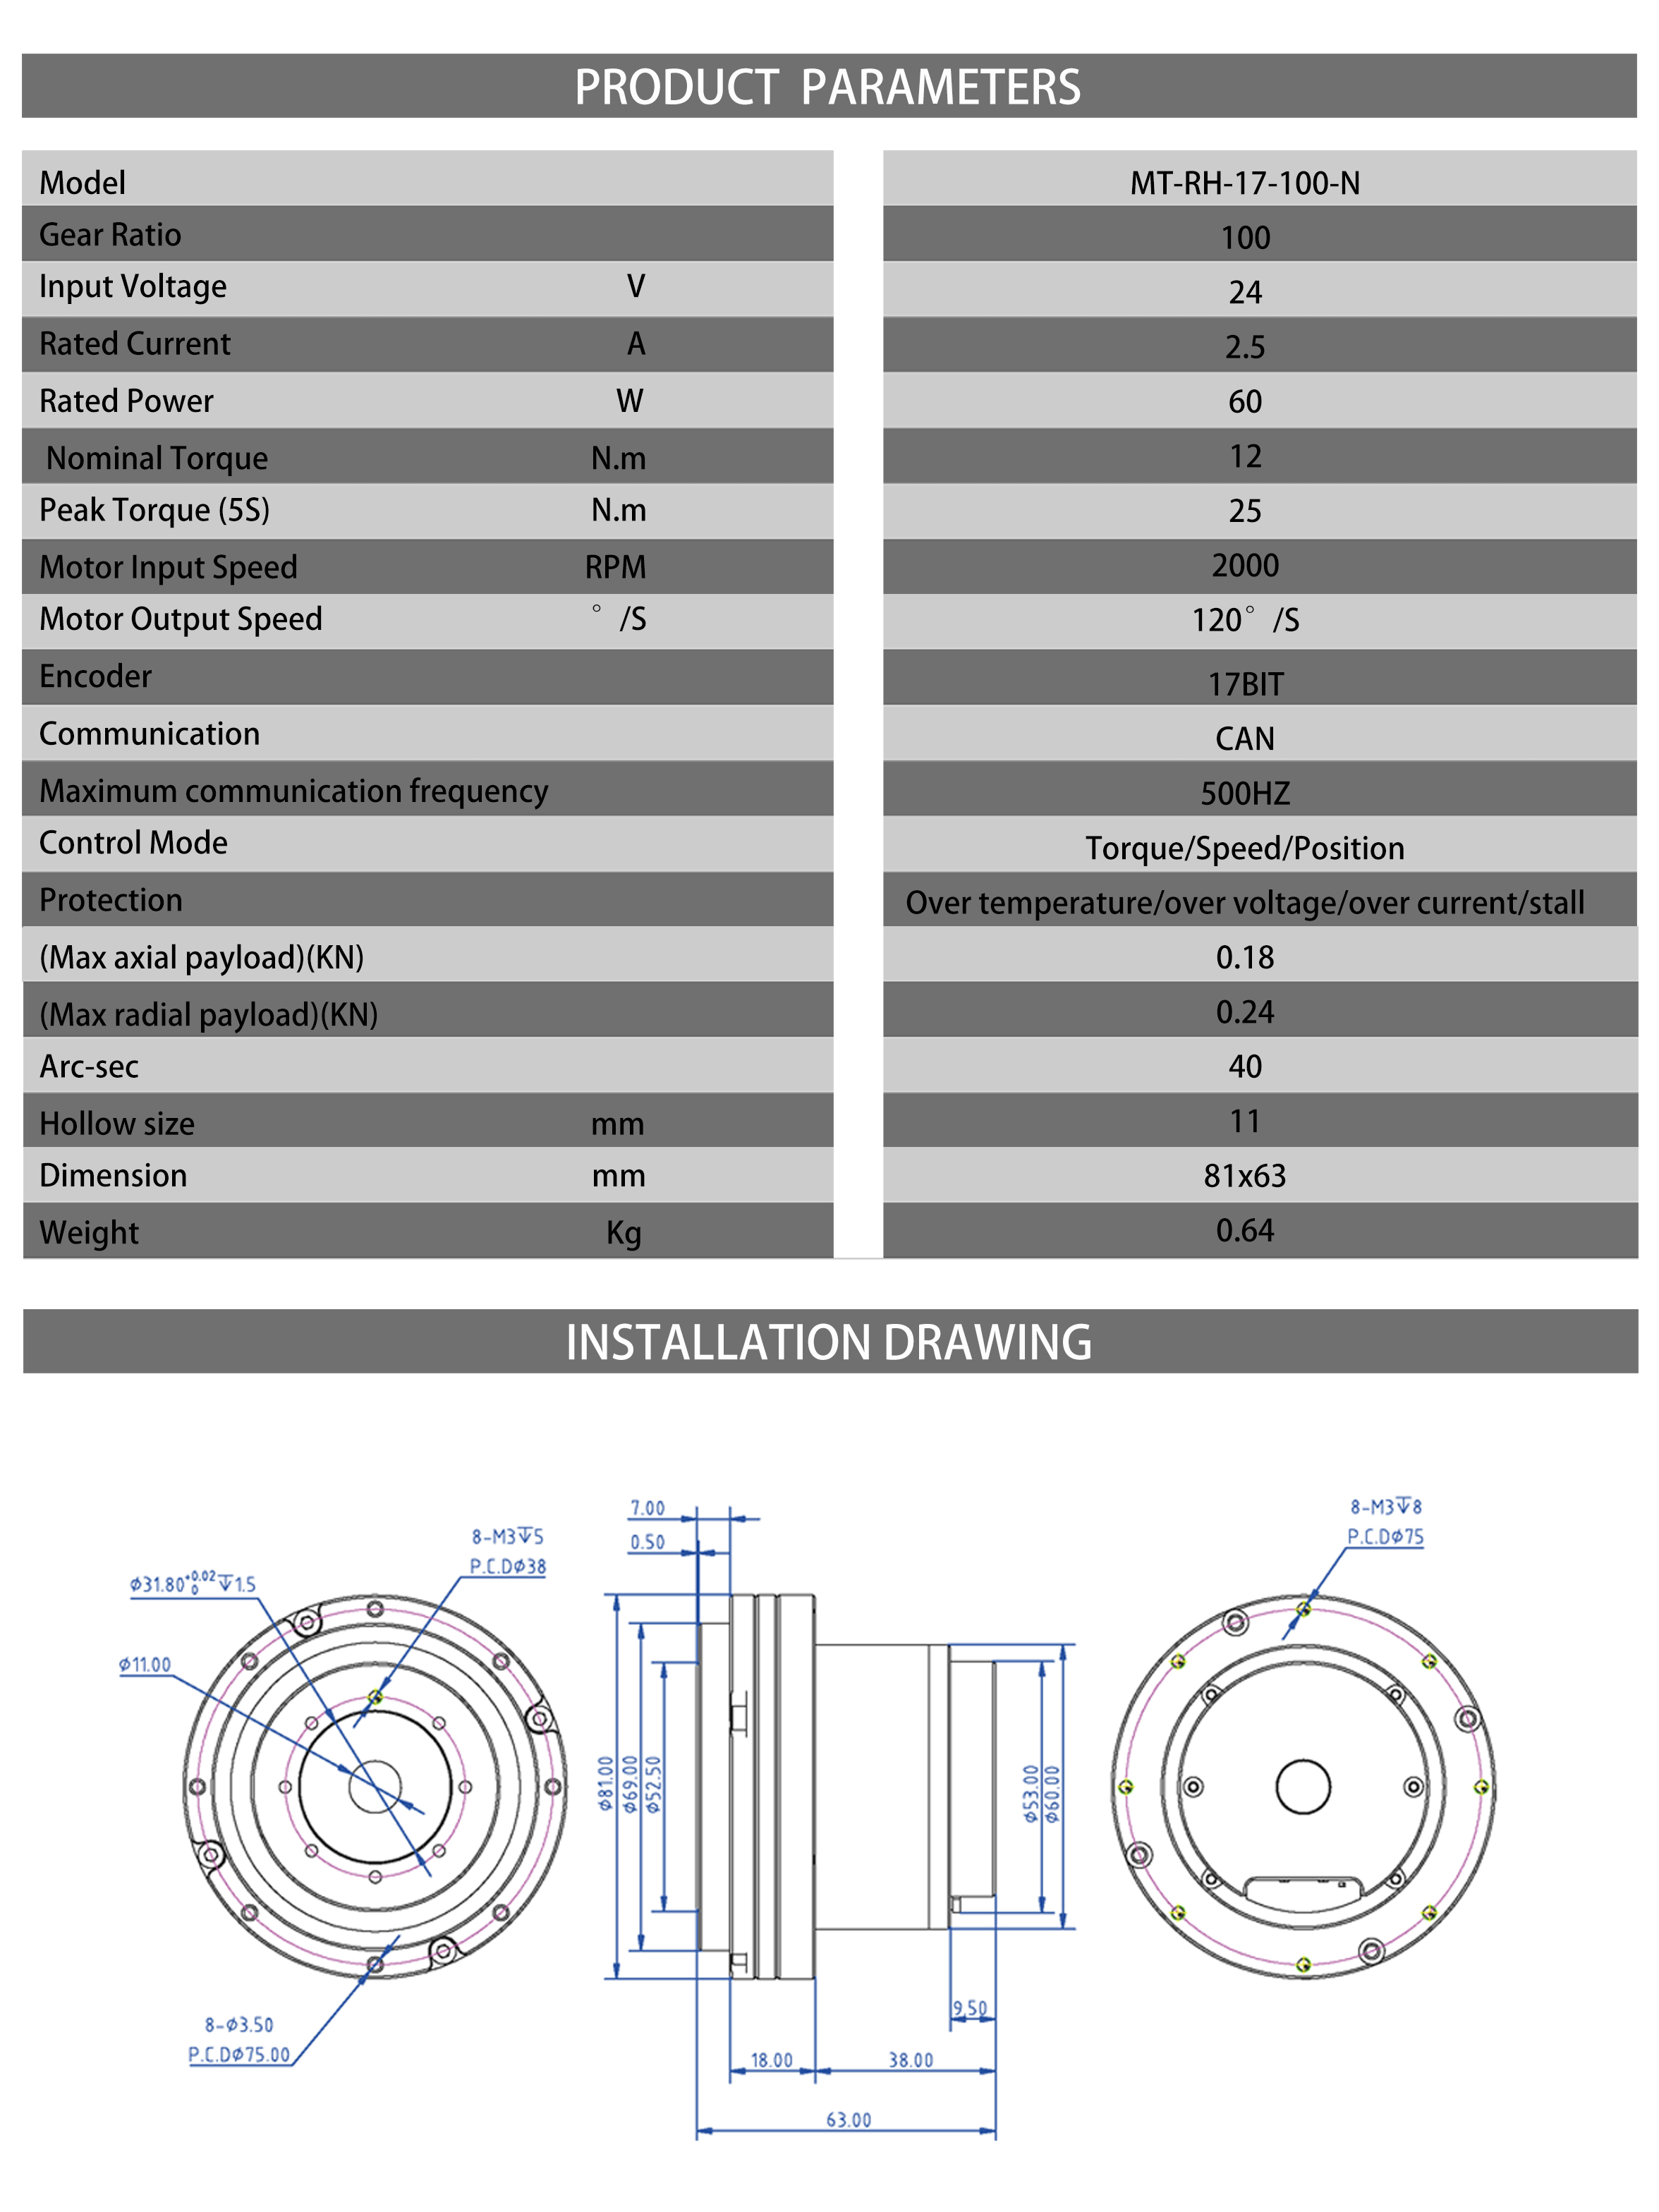 MT-RH-17-100-N Series Hollow shaft motor Harmonic drive reducer 100 to 1 actuator